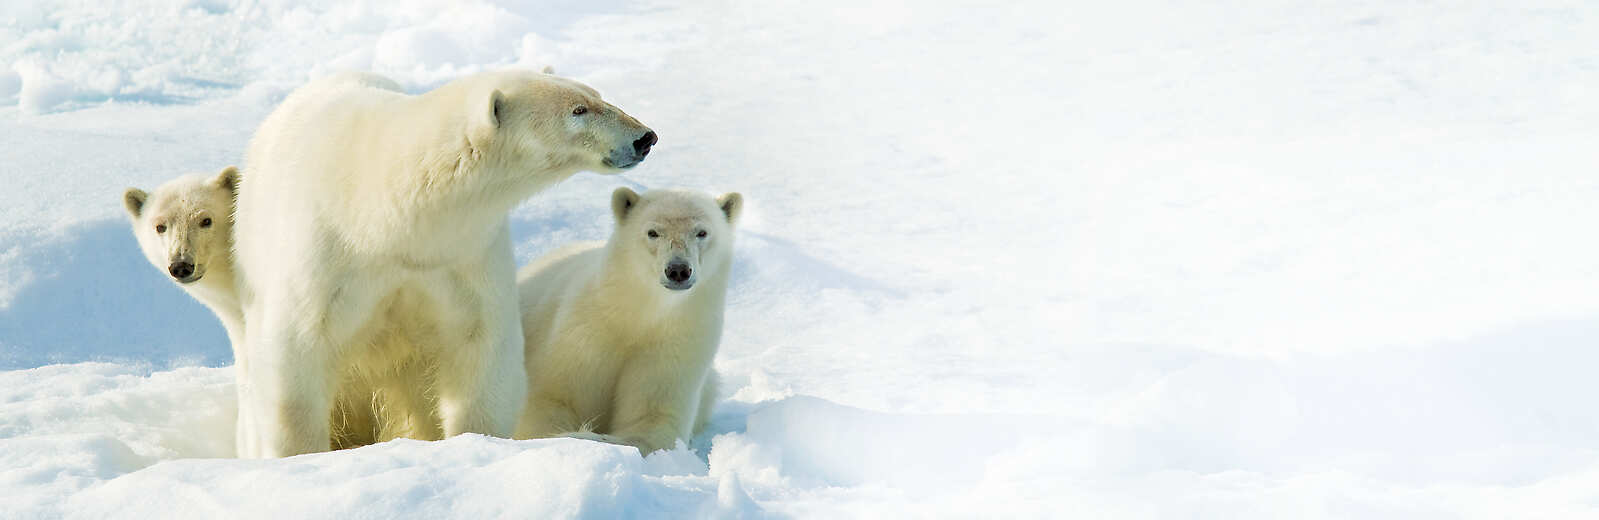 Polar Bears in the Arctic 